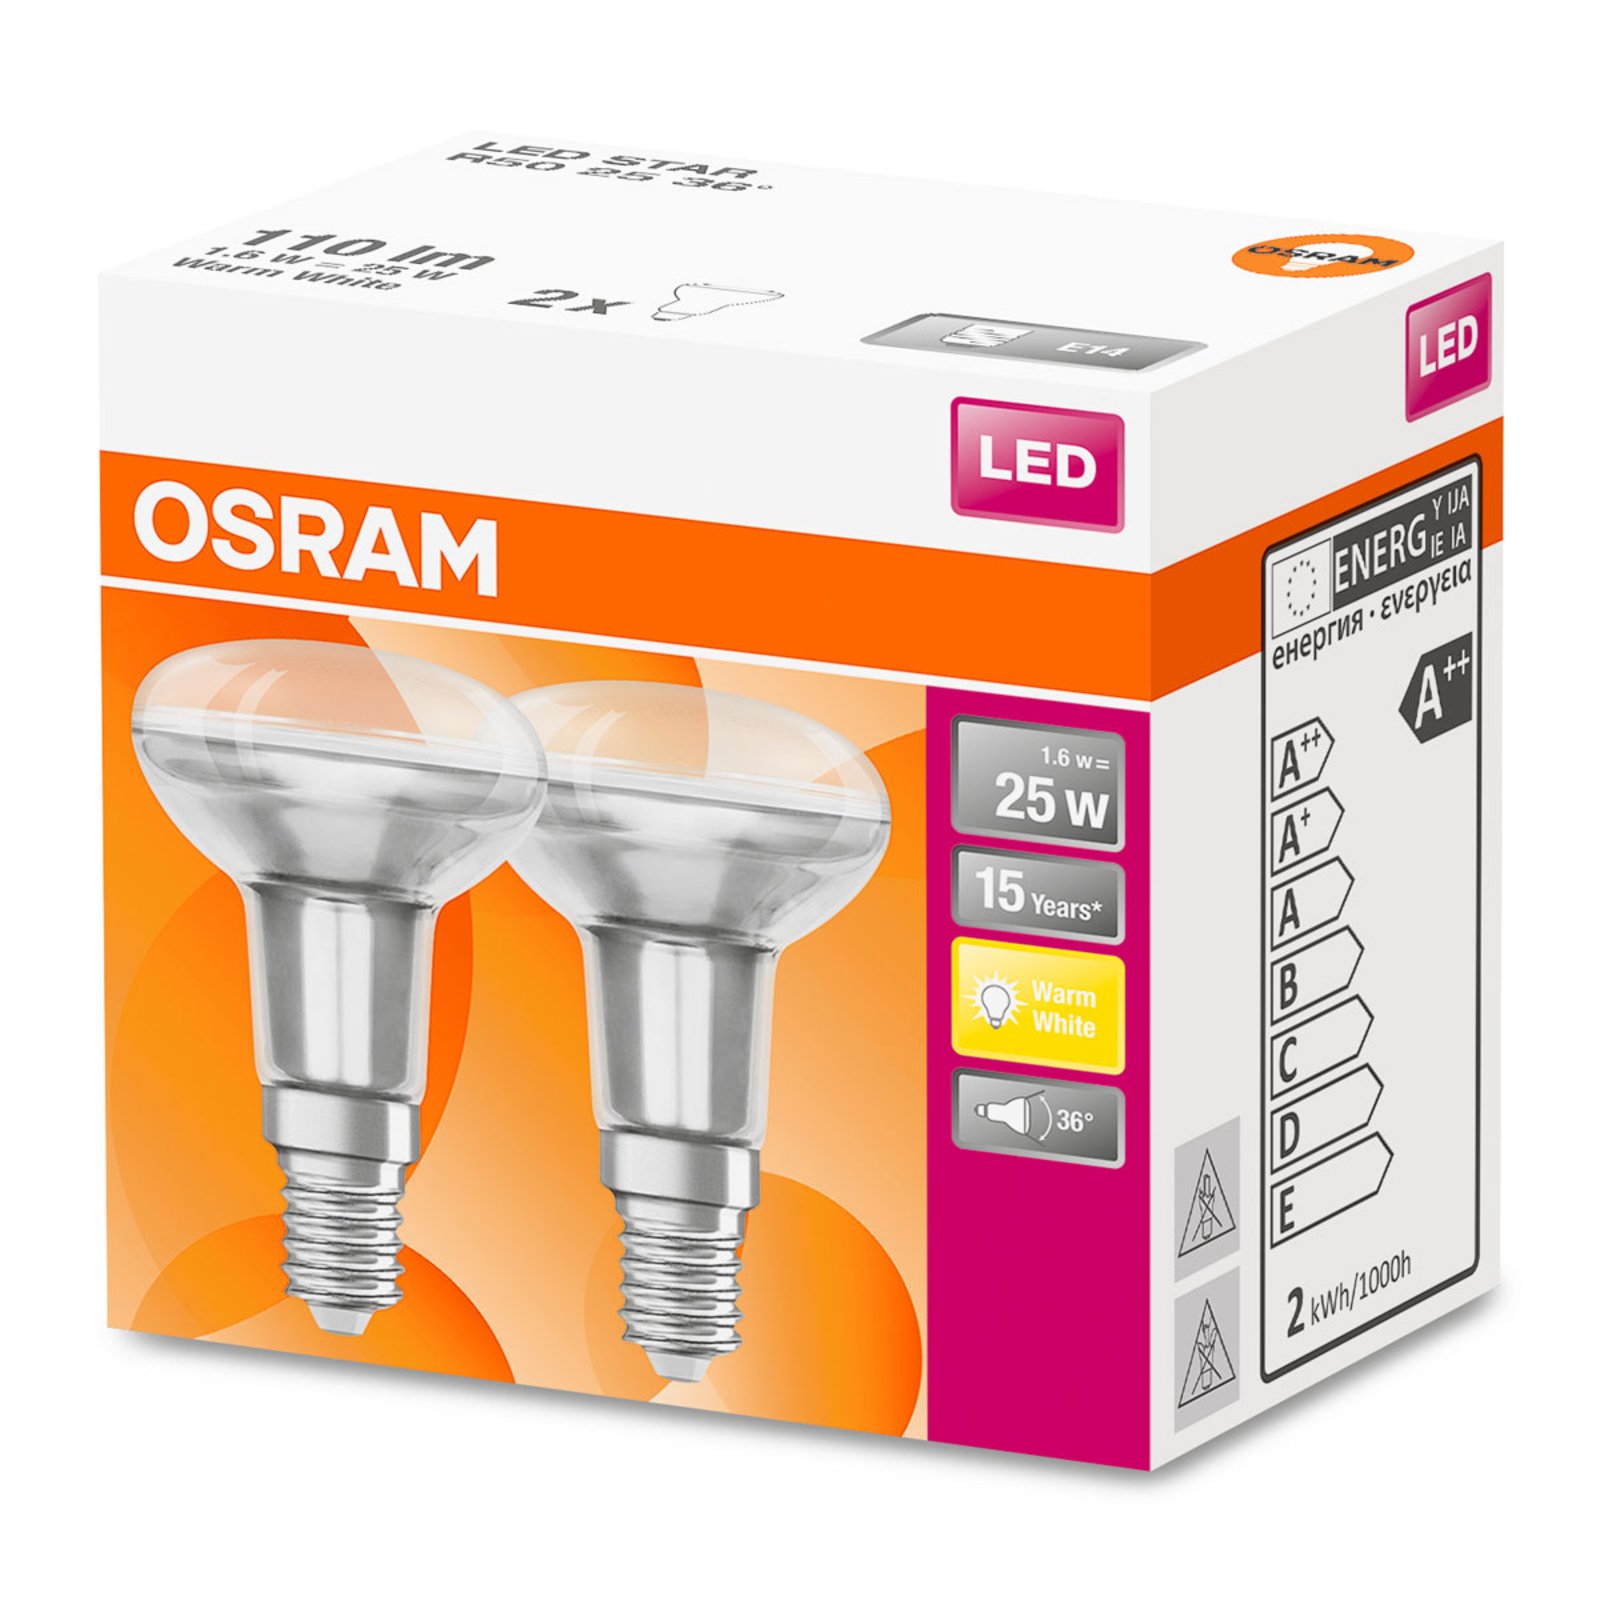 OSRAM reflector LED bulb E14 R50 1.6W 2700K 2-pack